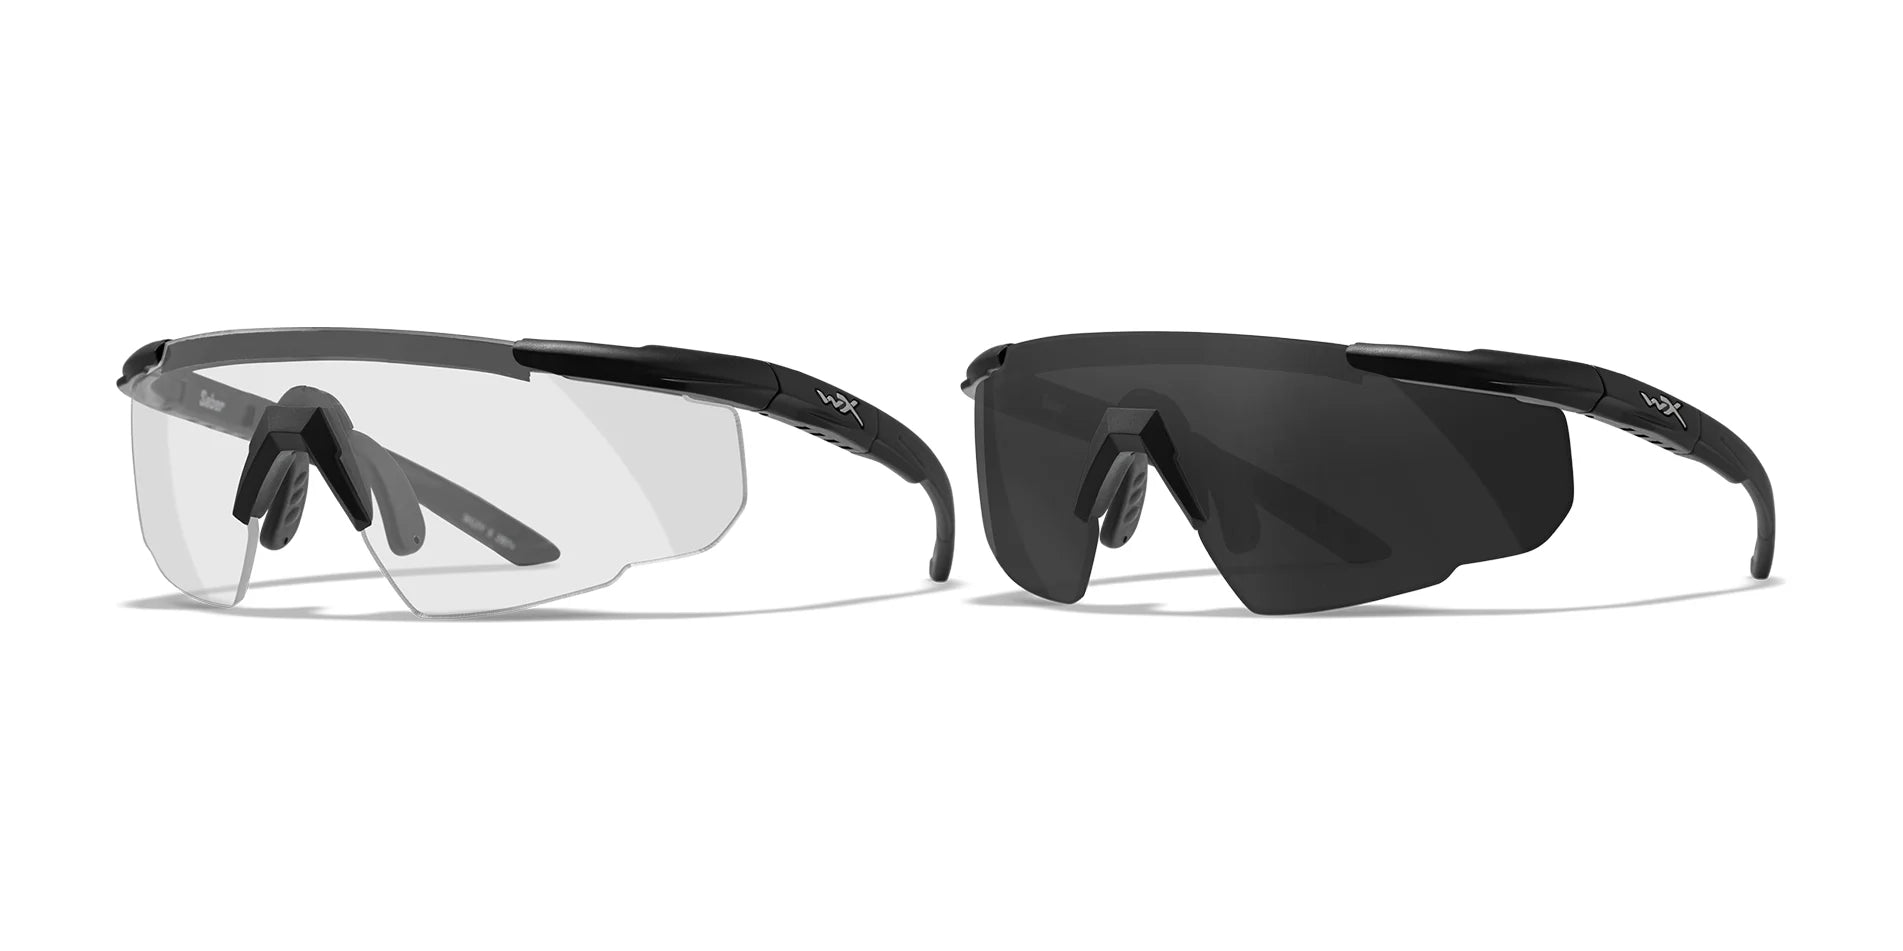 Wiley X SABER Safety Glasses Matte Black / Clear, Smoke Grey